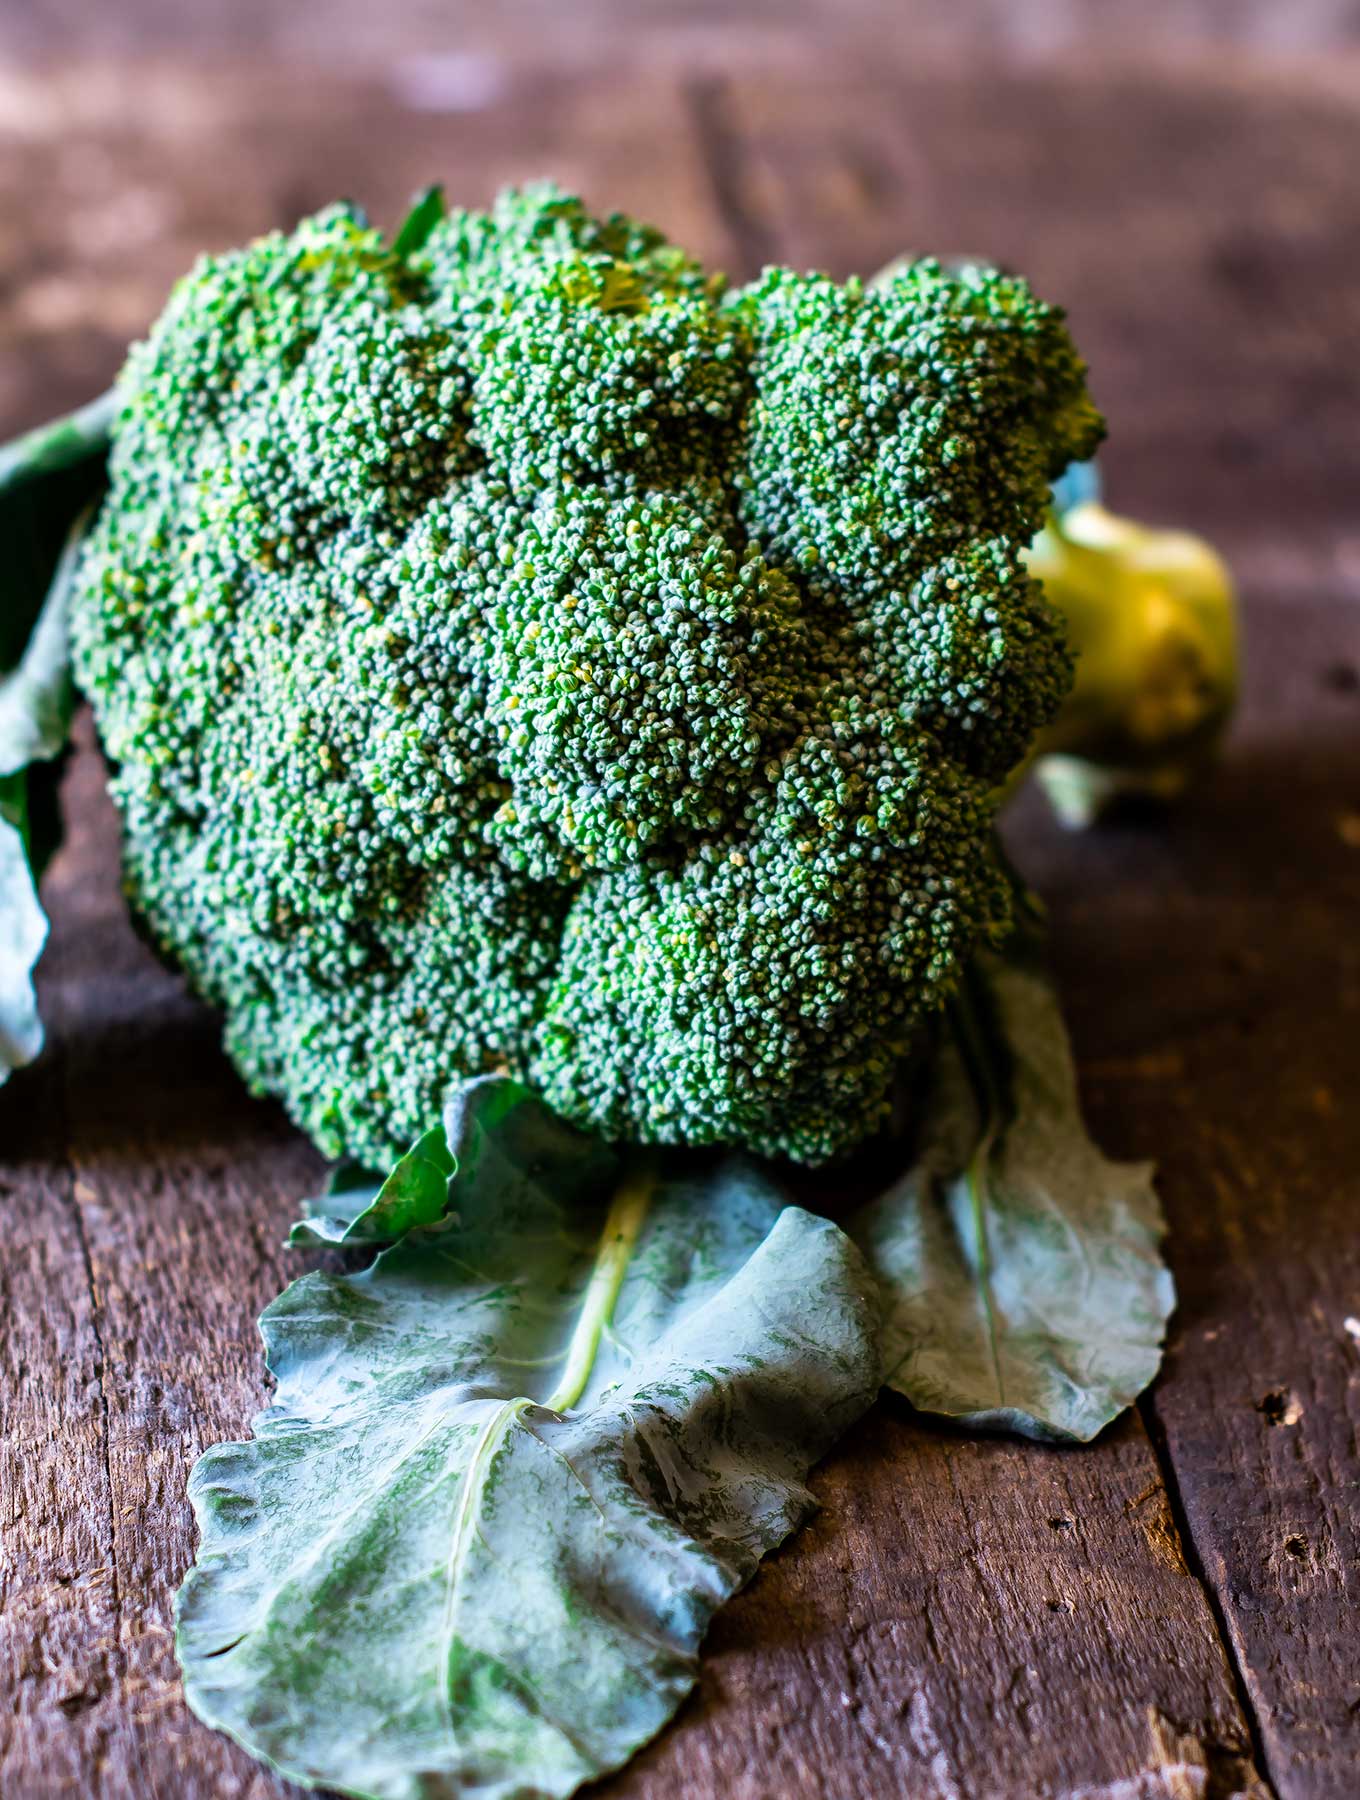 Head of broccoli on wood surface